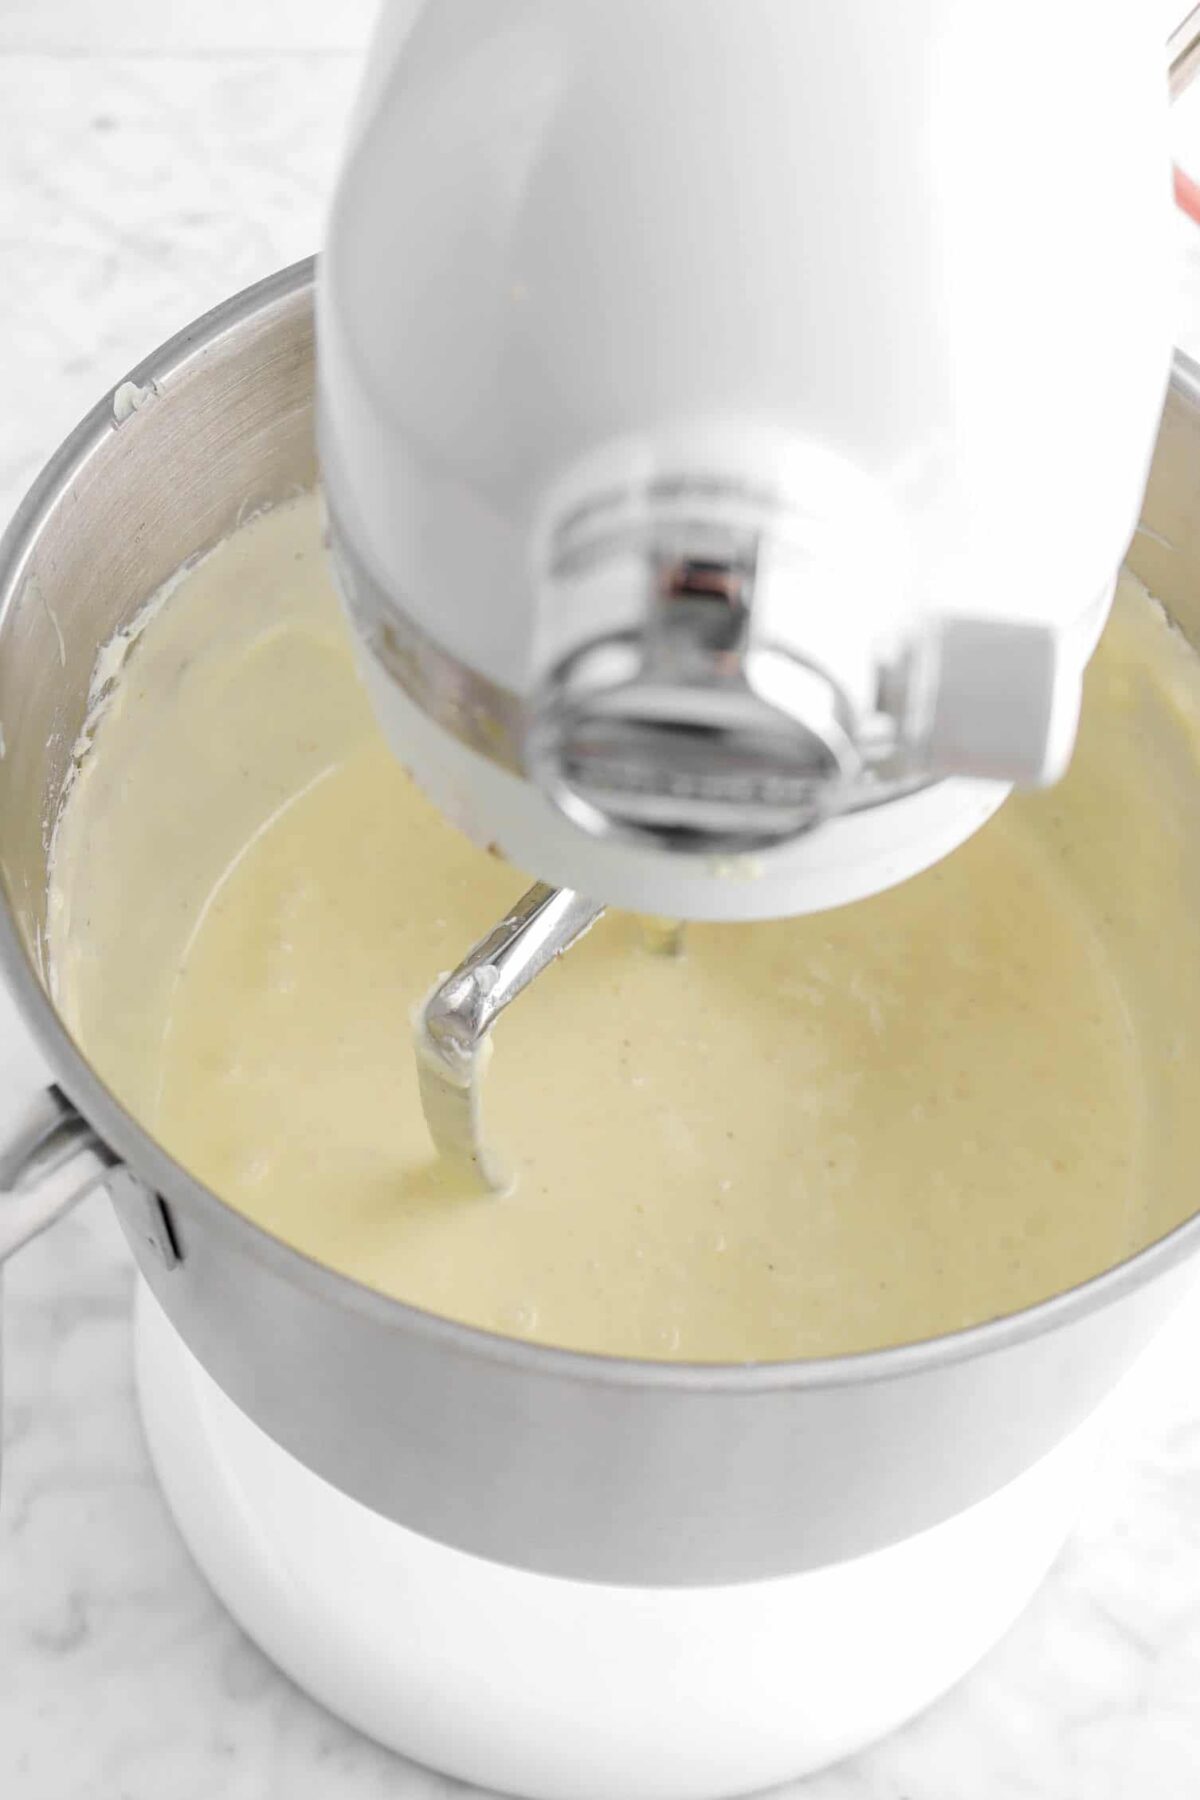 eggnog stirred into cheesecake batter